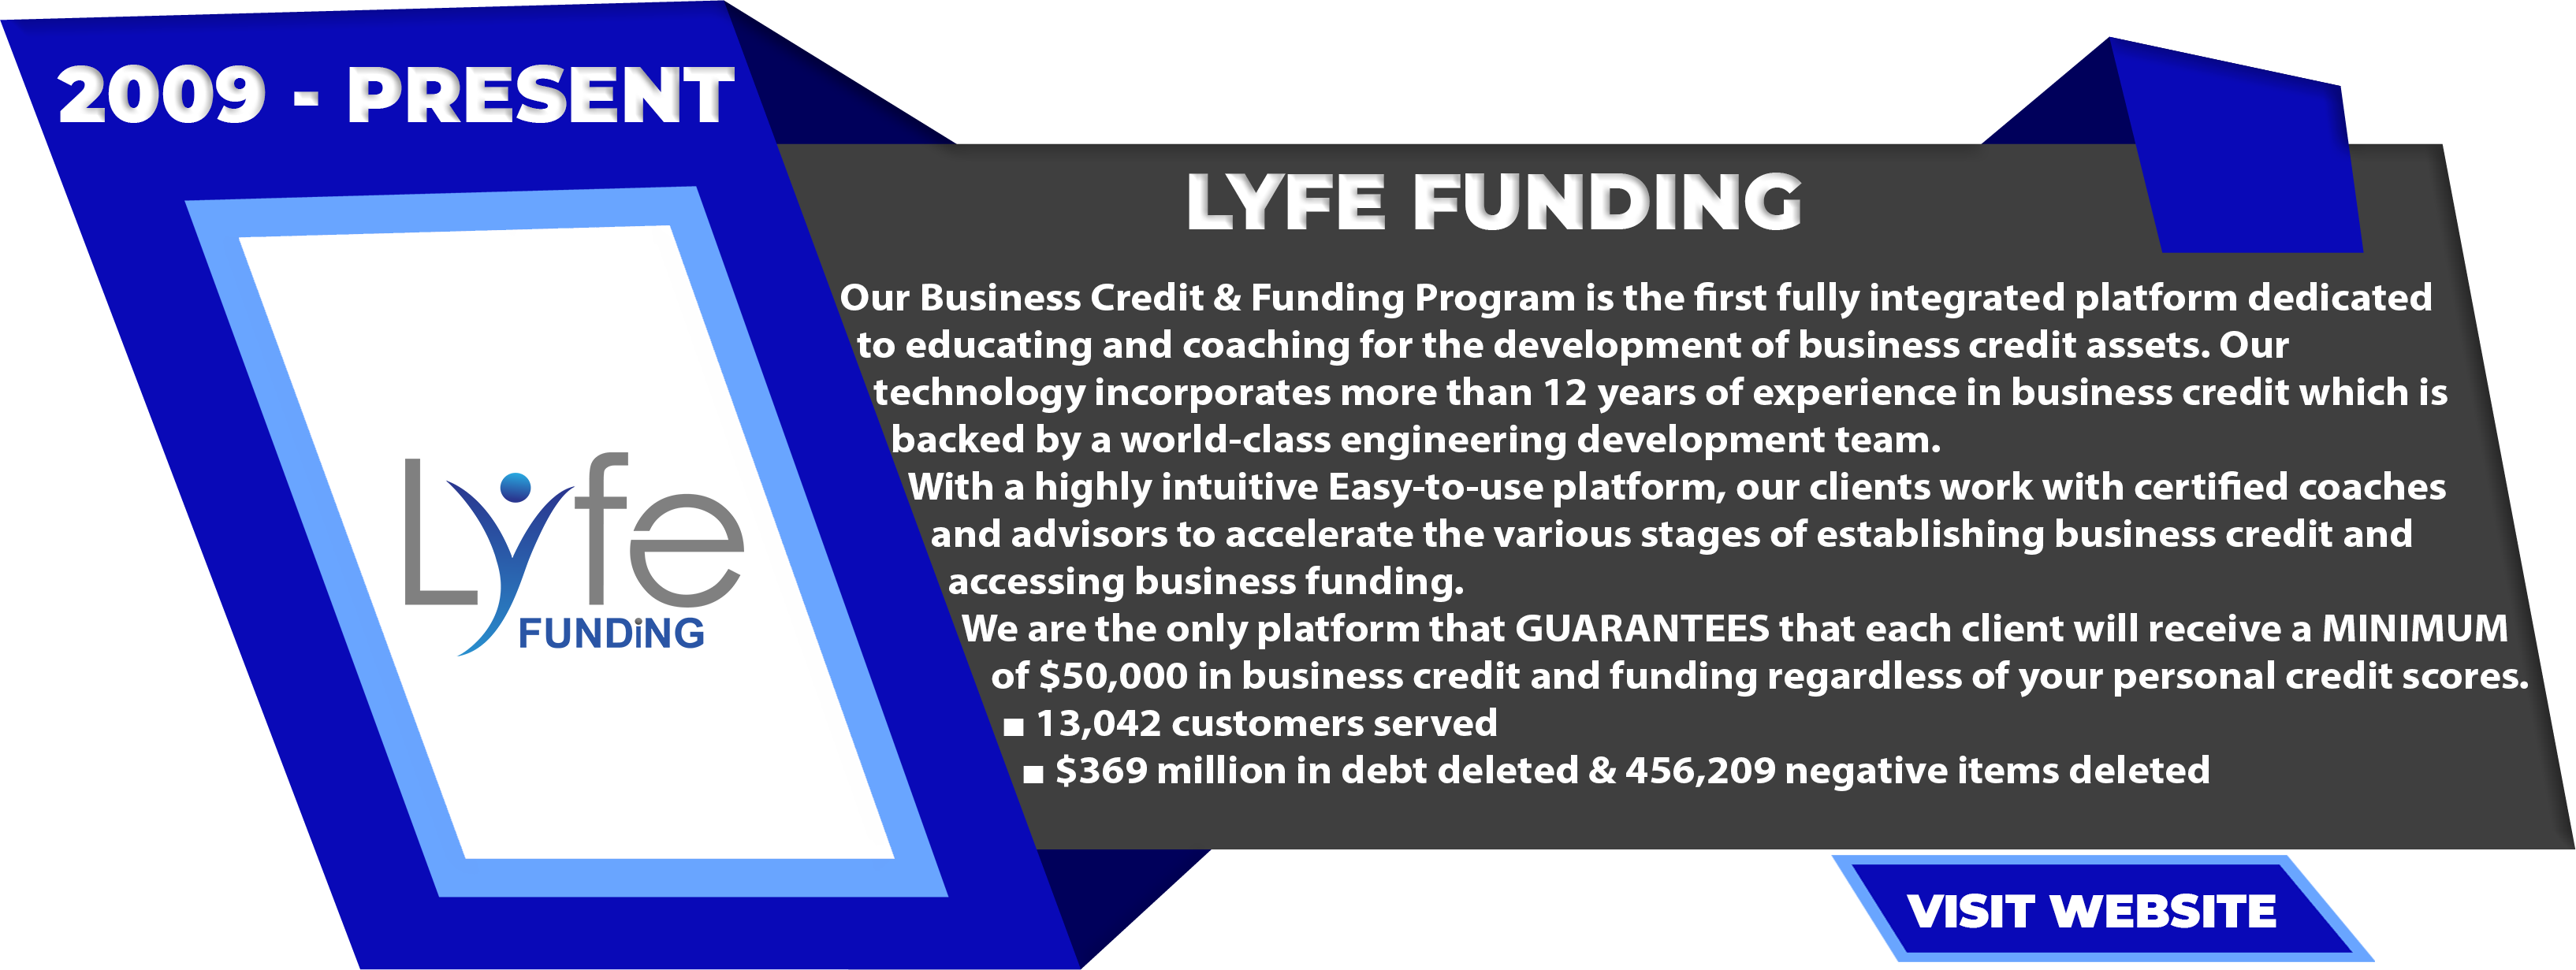 Lyfe Funding 2009 – Present